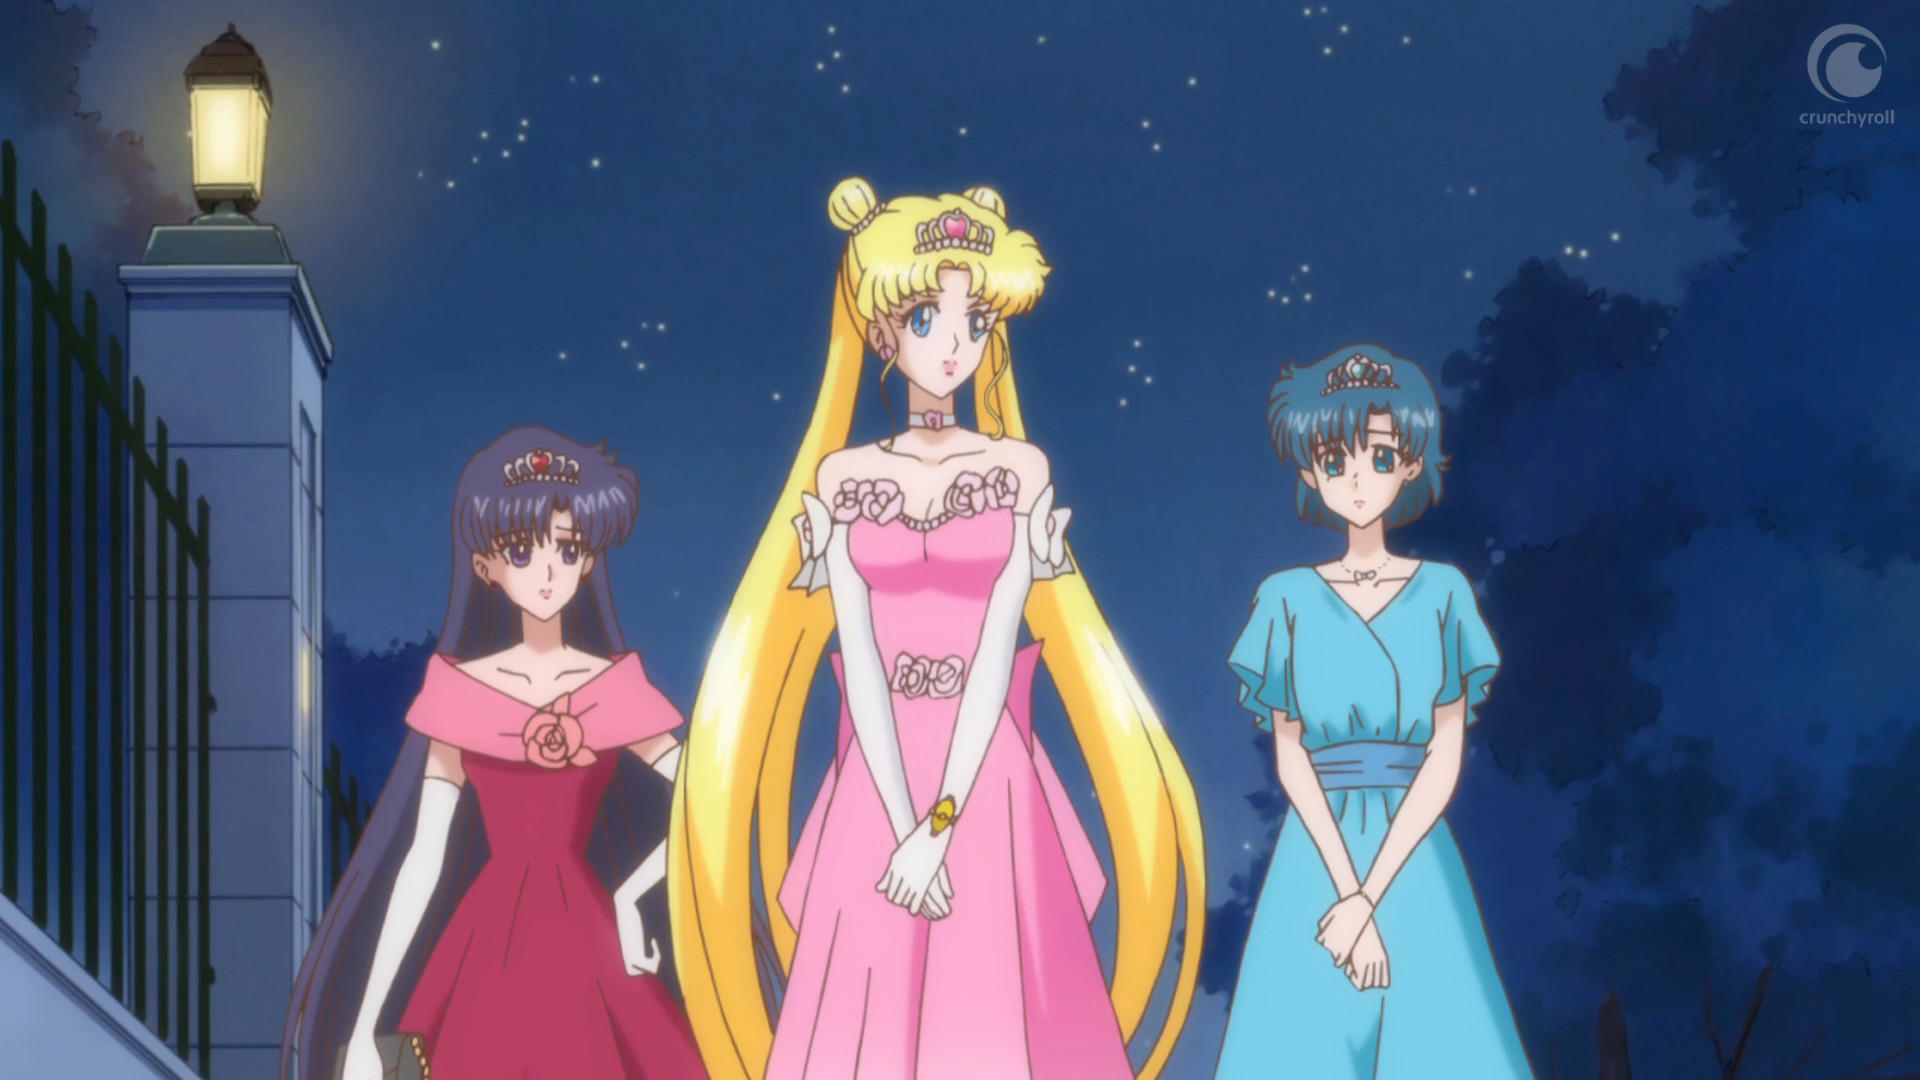 Things Heat Up in Princess Kakyu's Sailor Moon Cosmos Transformation  Trailer - Crunchyroll News